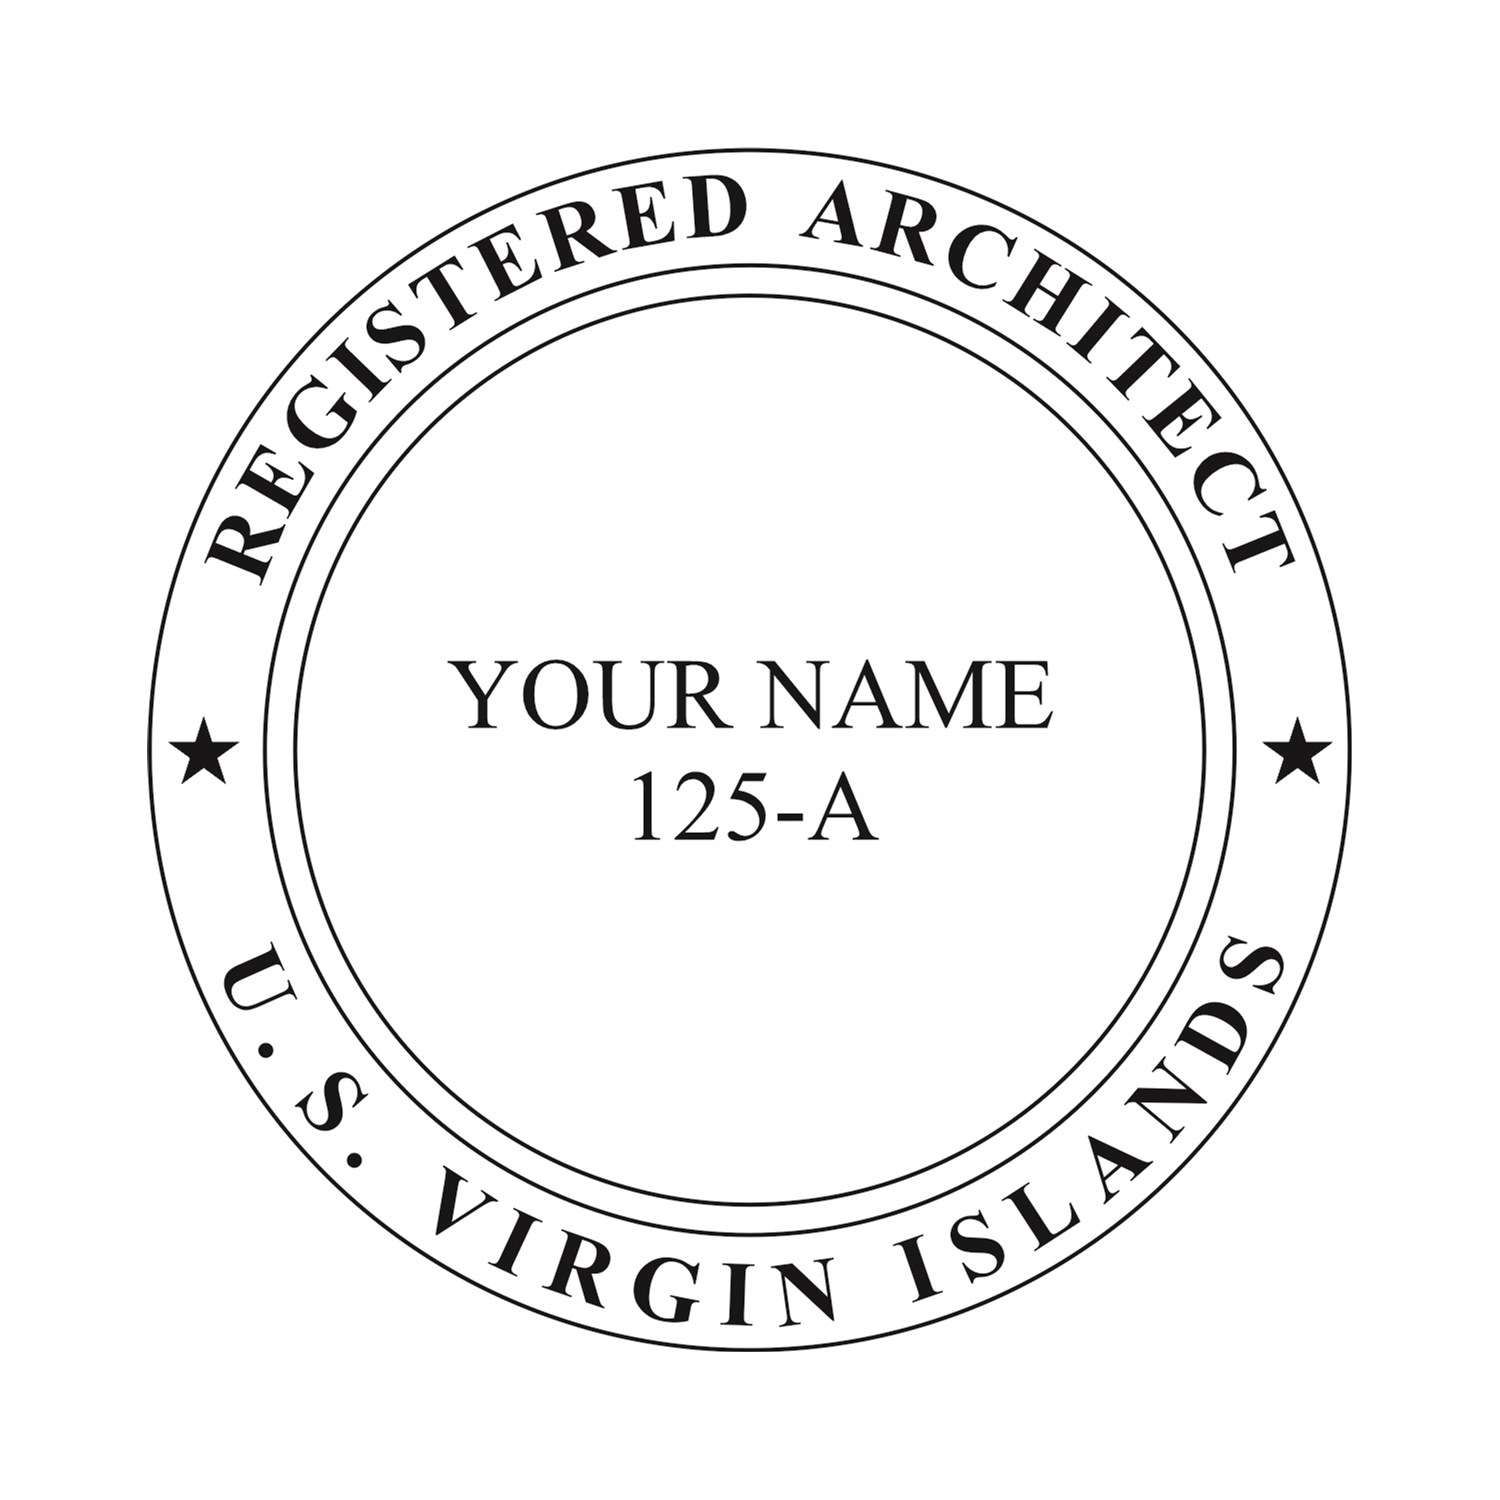 Architect Seal - Pocket Style - Virgin Islands